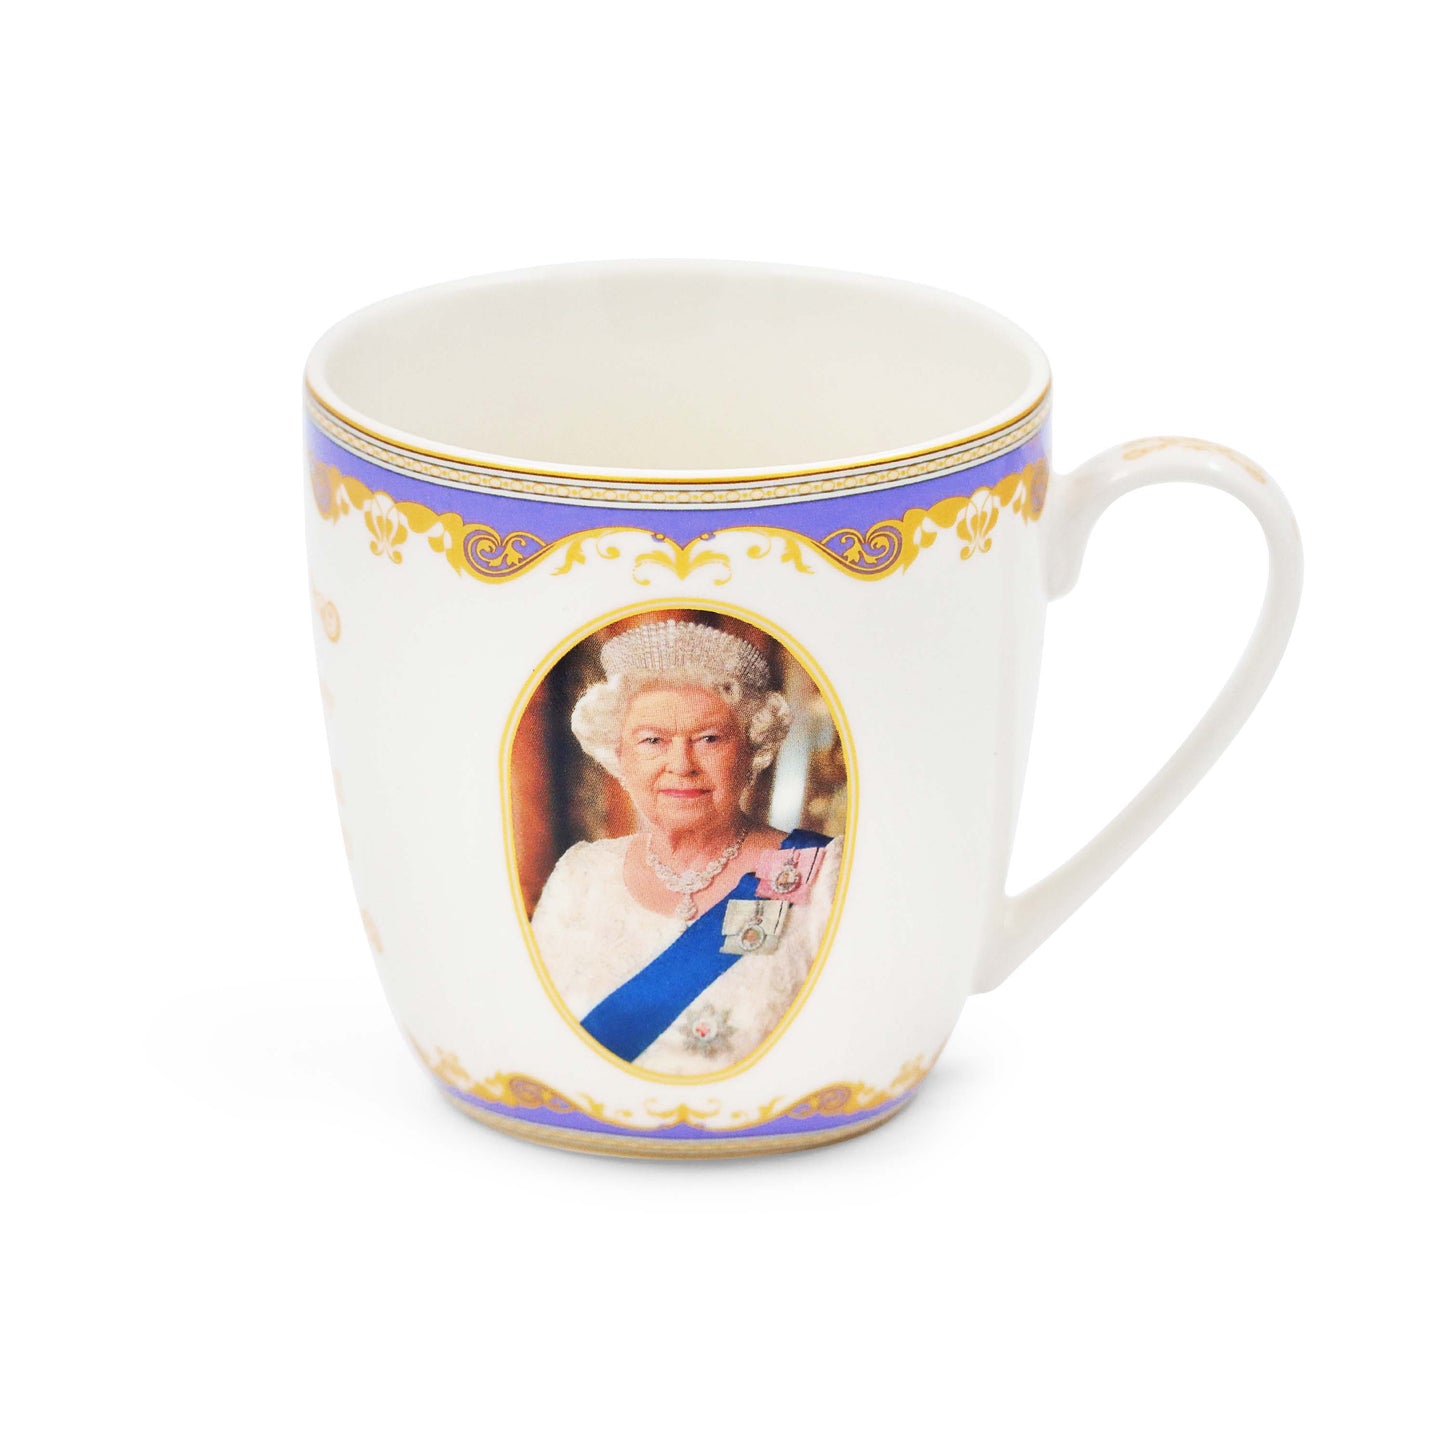 Royal Family gift set